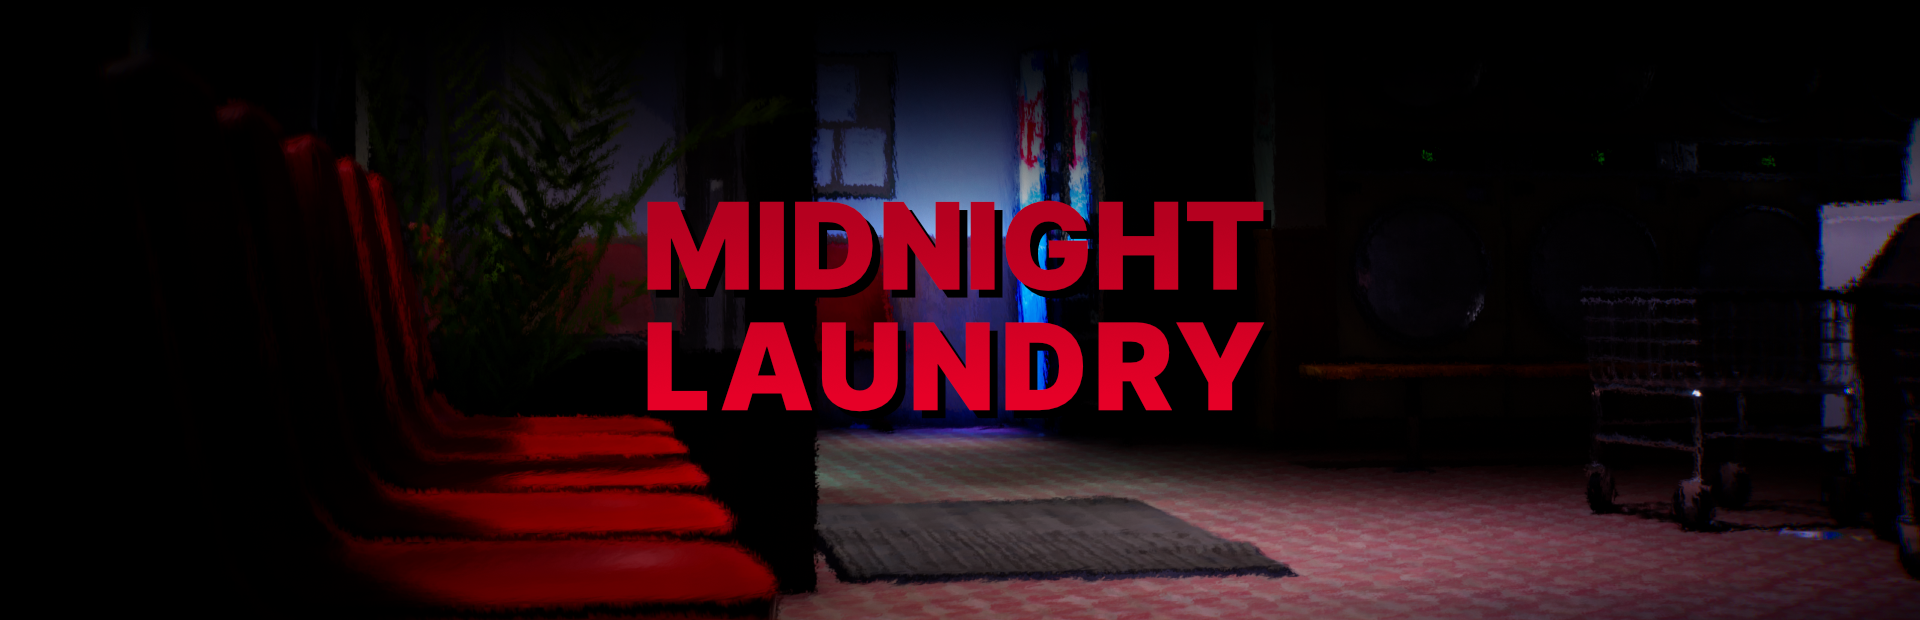 Midnight Laundry